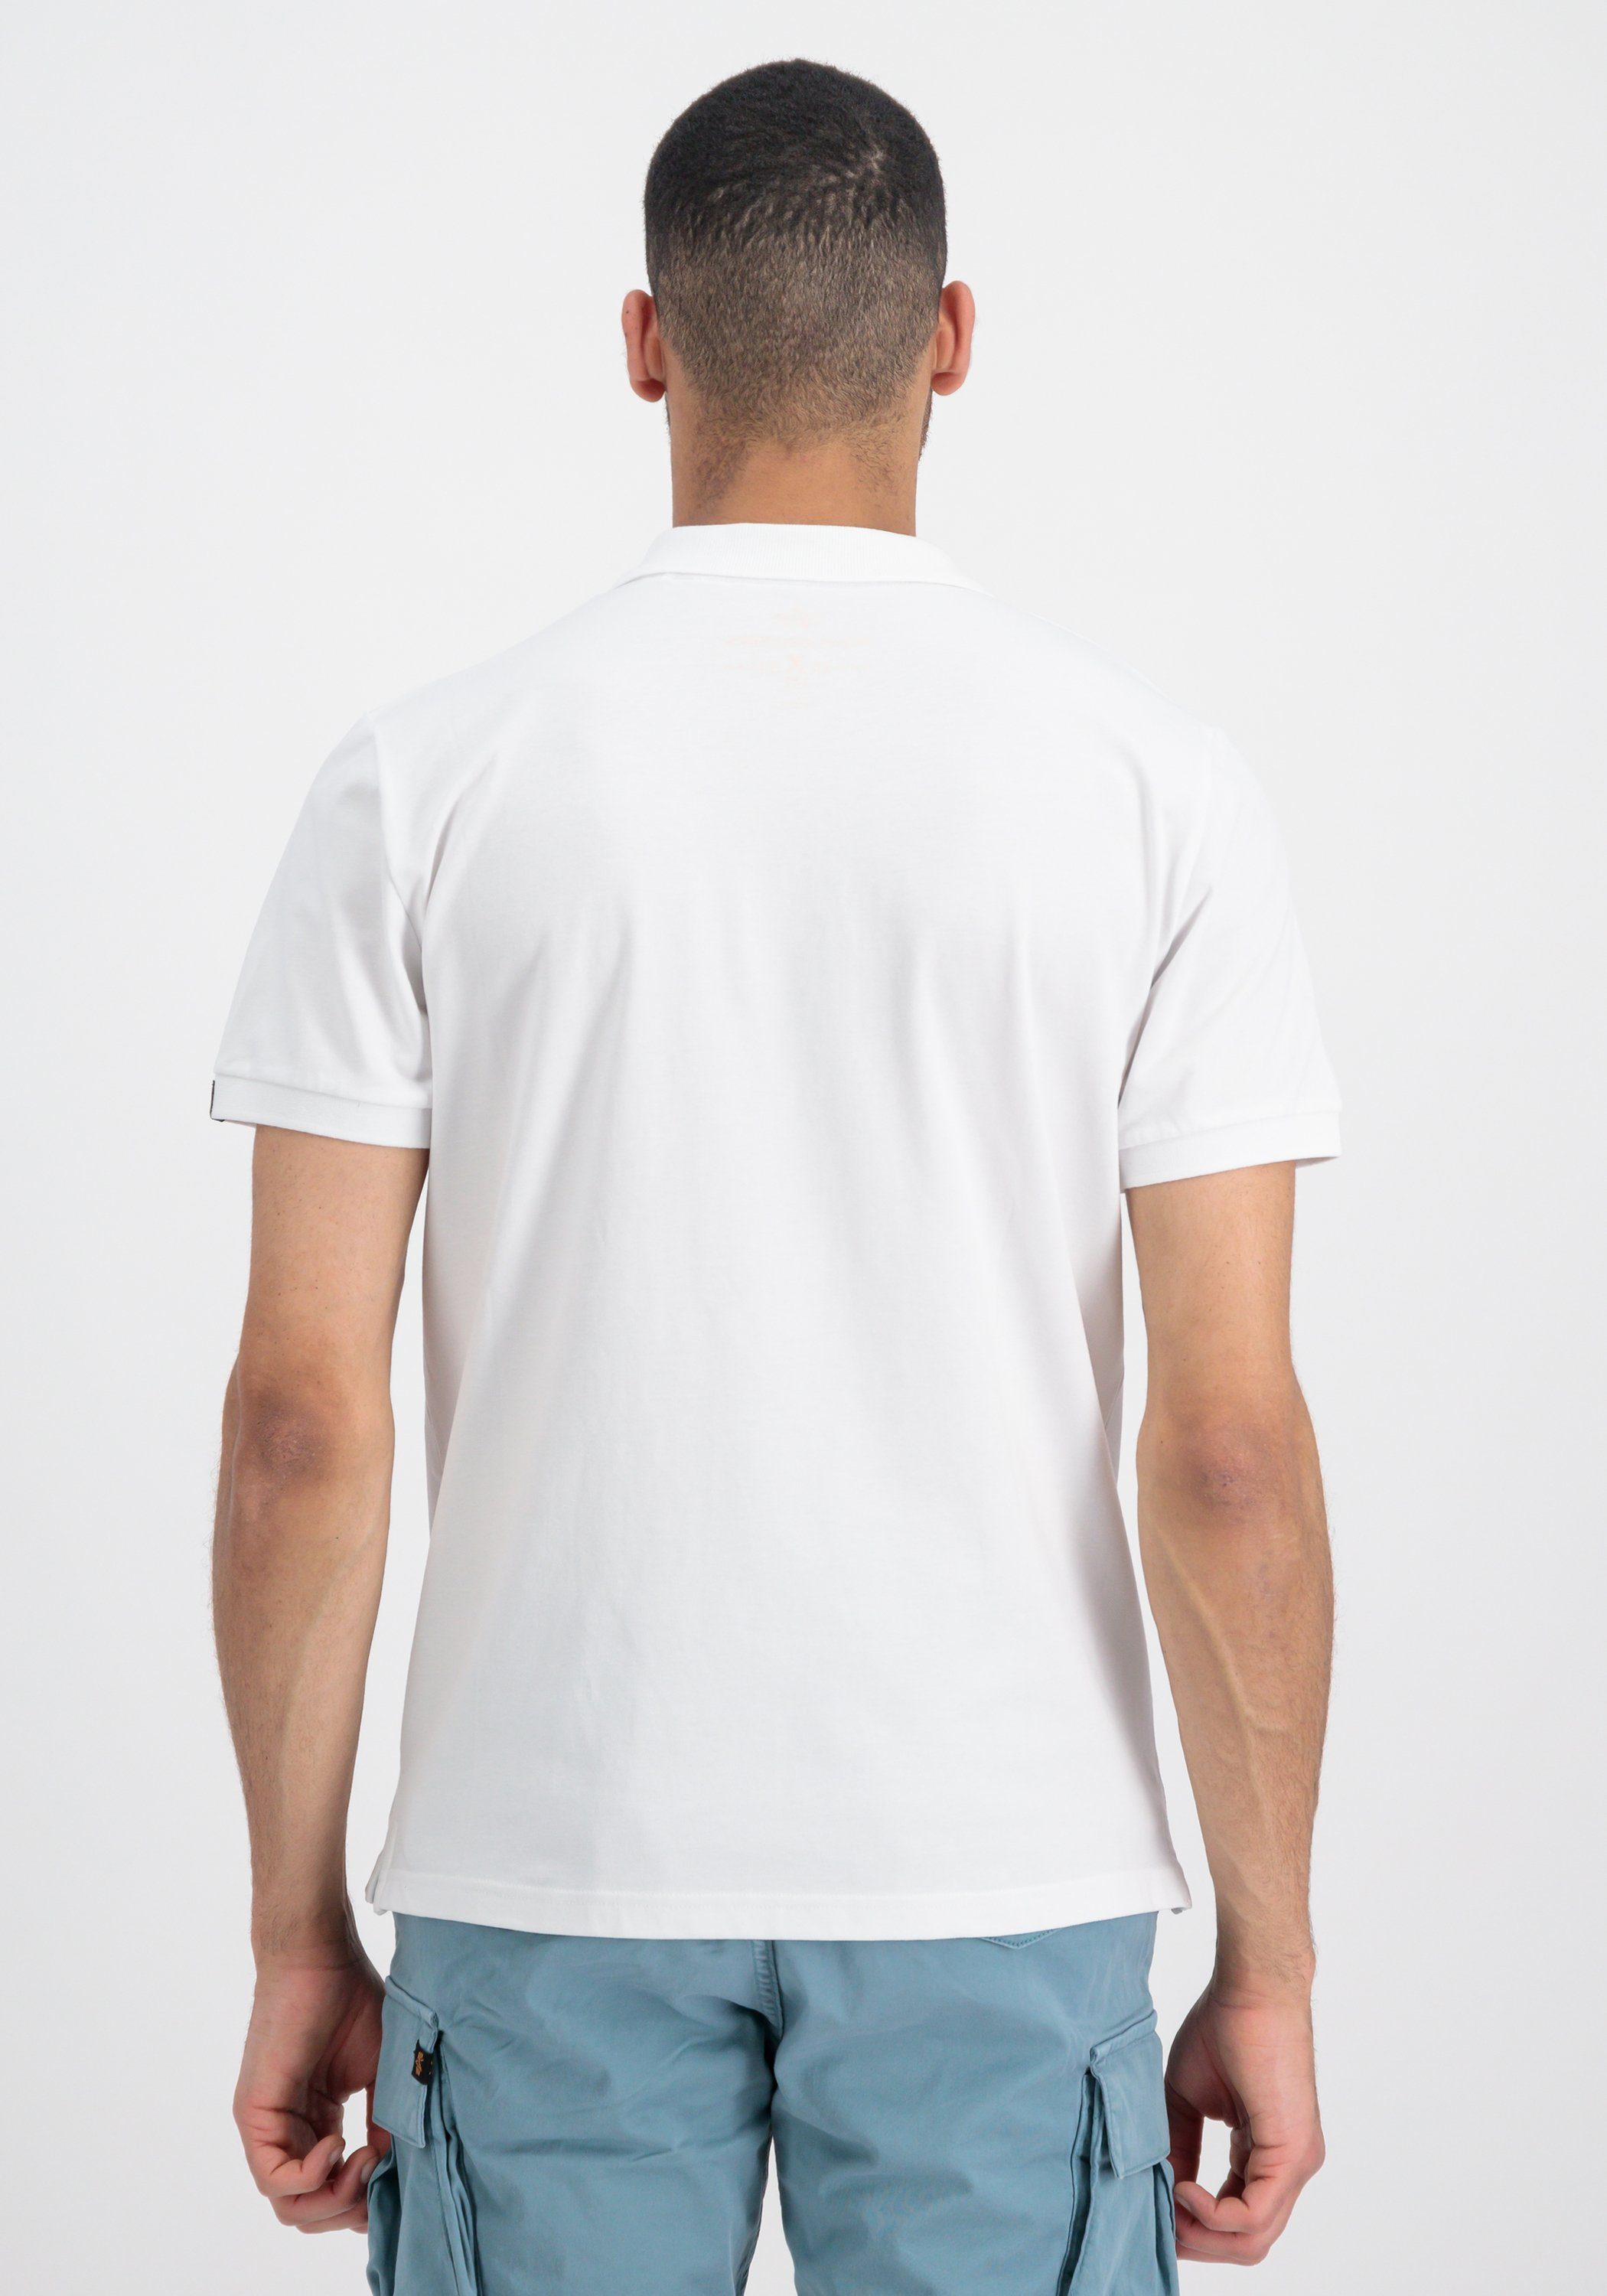 Men Polo Polo Industries Alpha Industries - Alpha Poloshirt Shirts white X-Fit